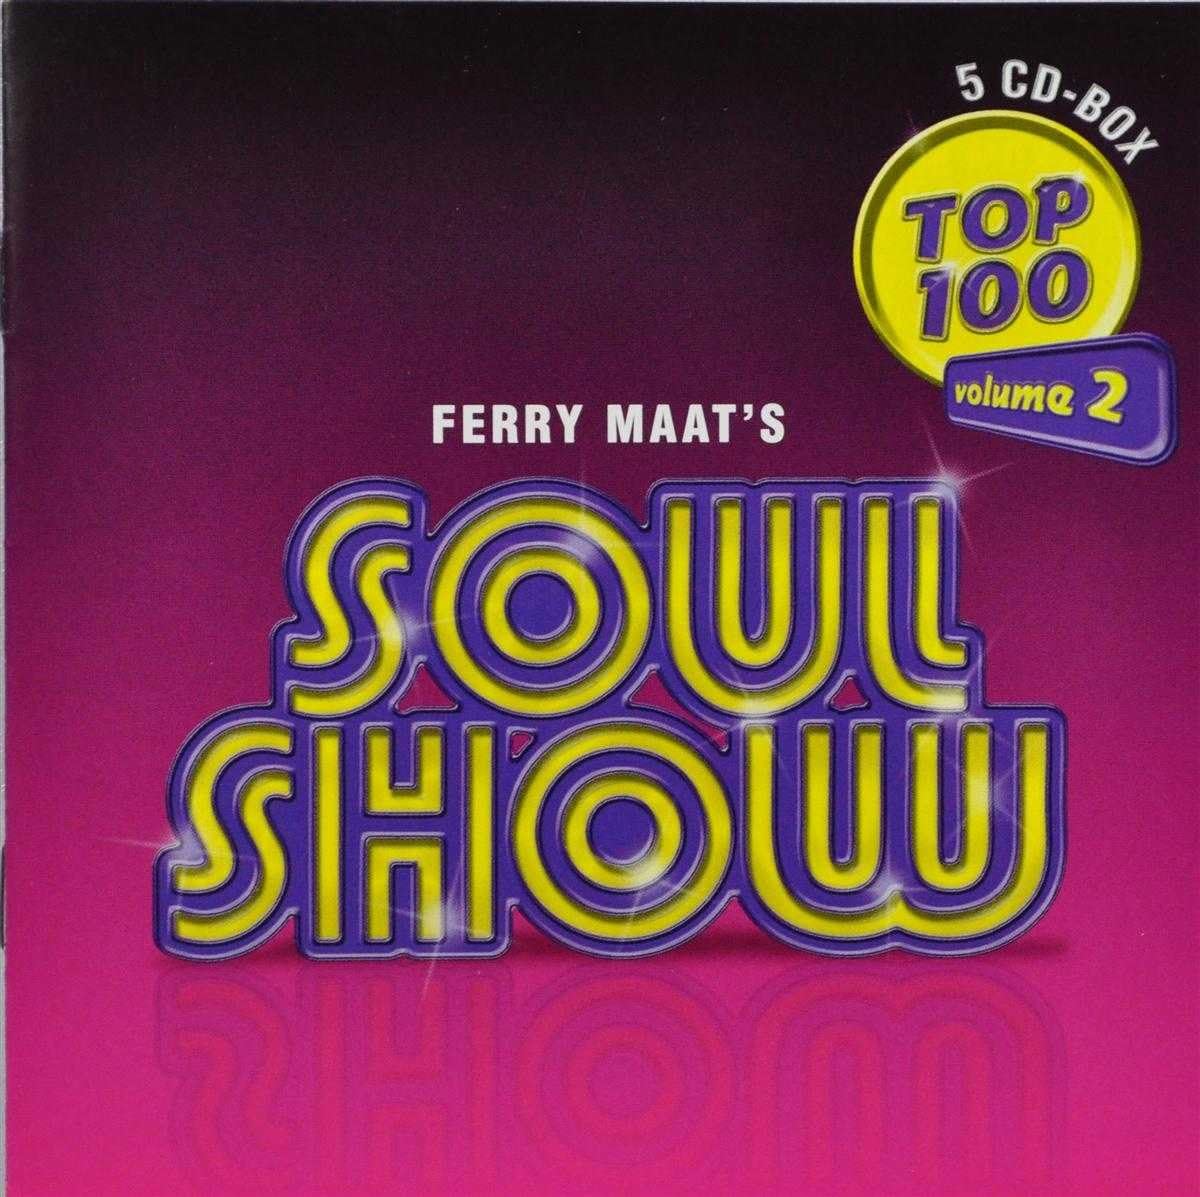 Ferry Maats's Soulshow Top 100 Vol 2